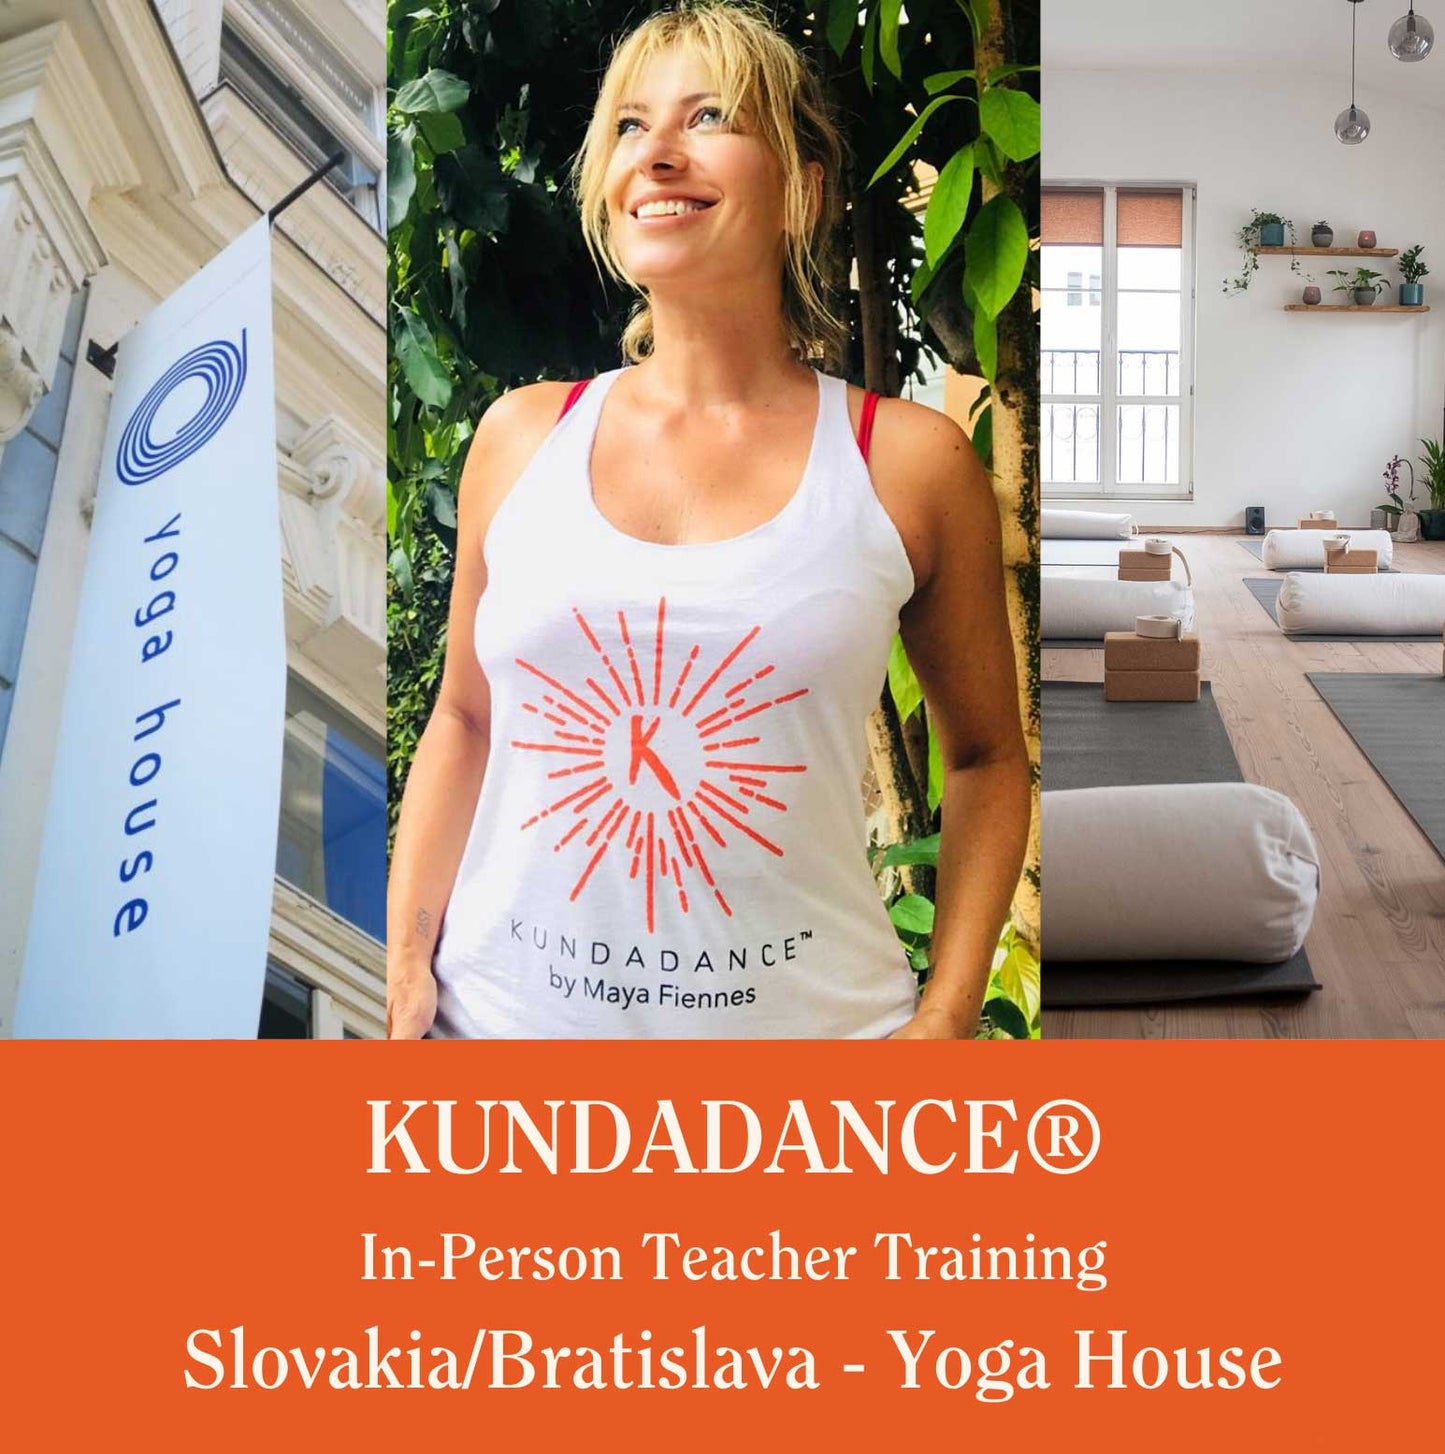 KUNDADANCE® In-Person Teacher Training - Slovakia/Bratislava